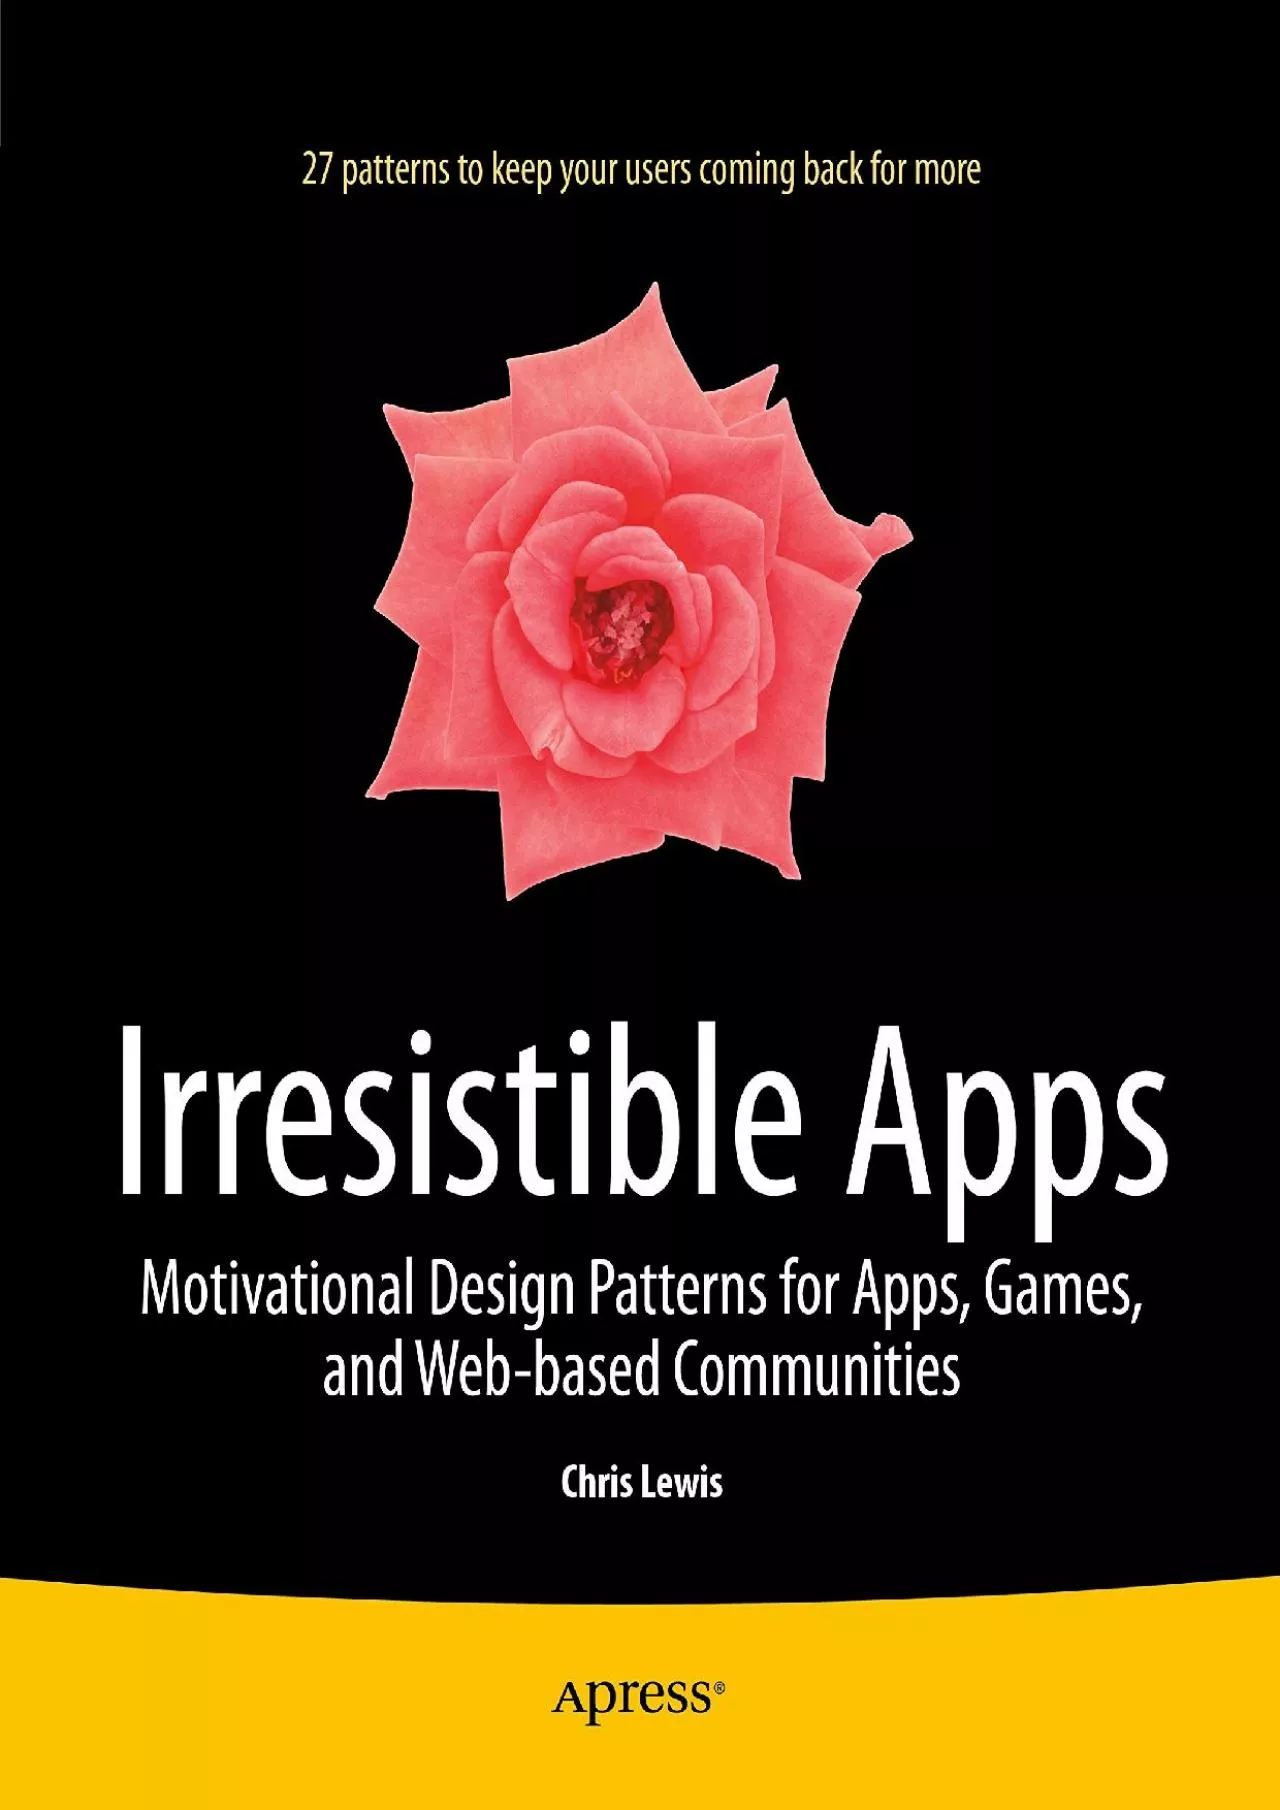 (DOWNLOAD)-Irresistible Apps Motivational Design Patterns for Apps Games and Web-based